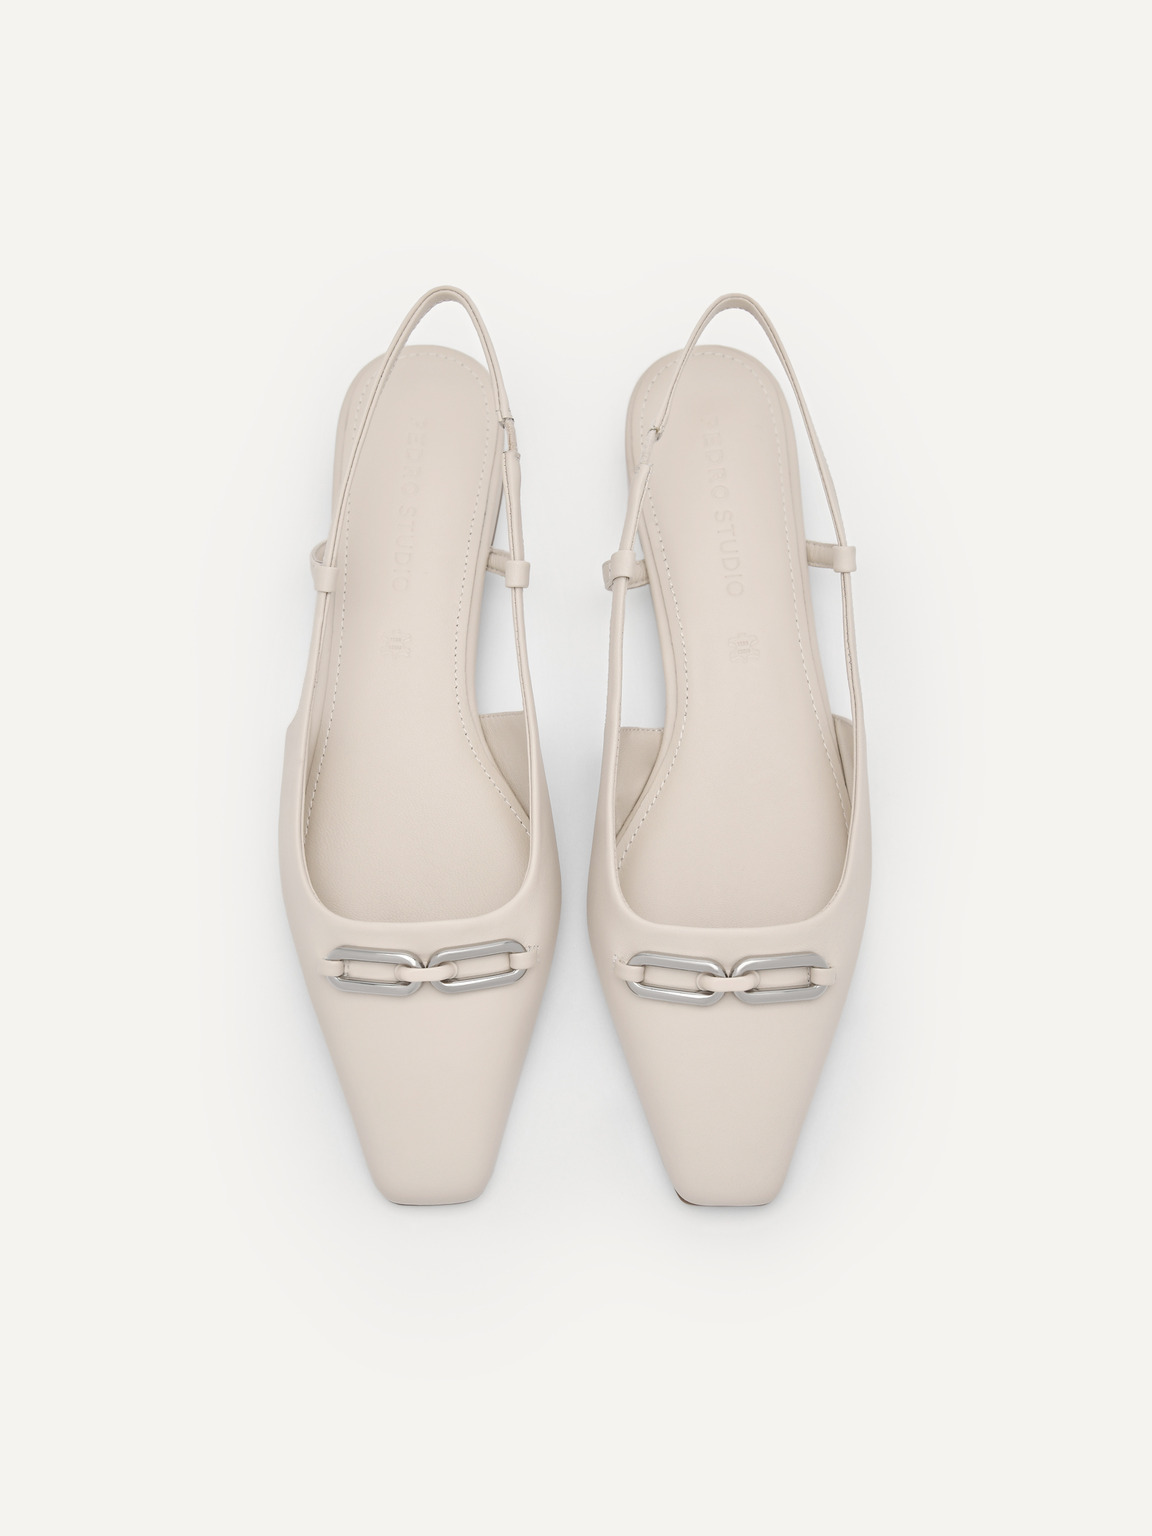 PEDRO Studio Kate Leather Ballerina Flats, Cream